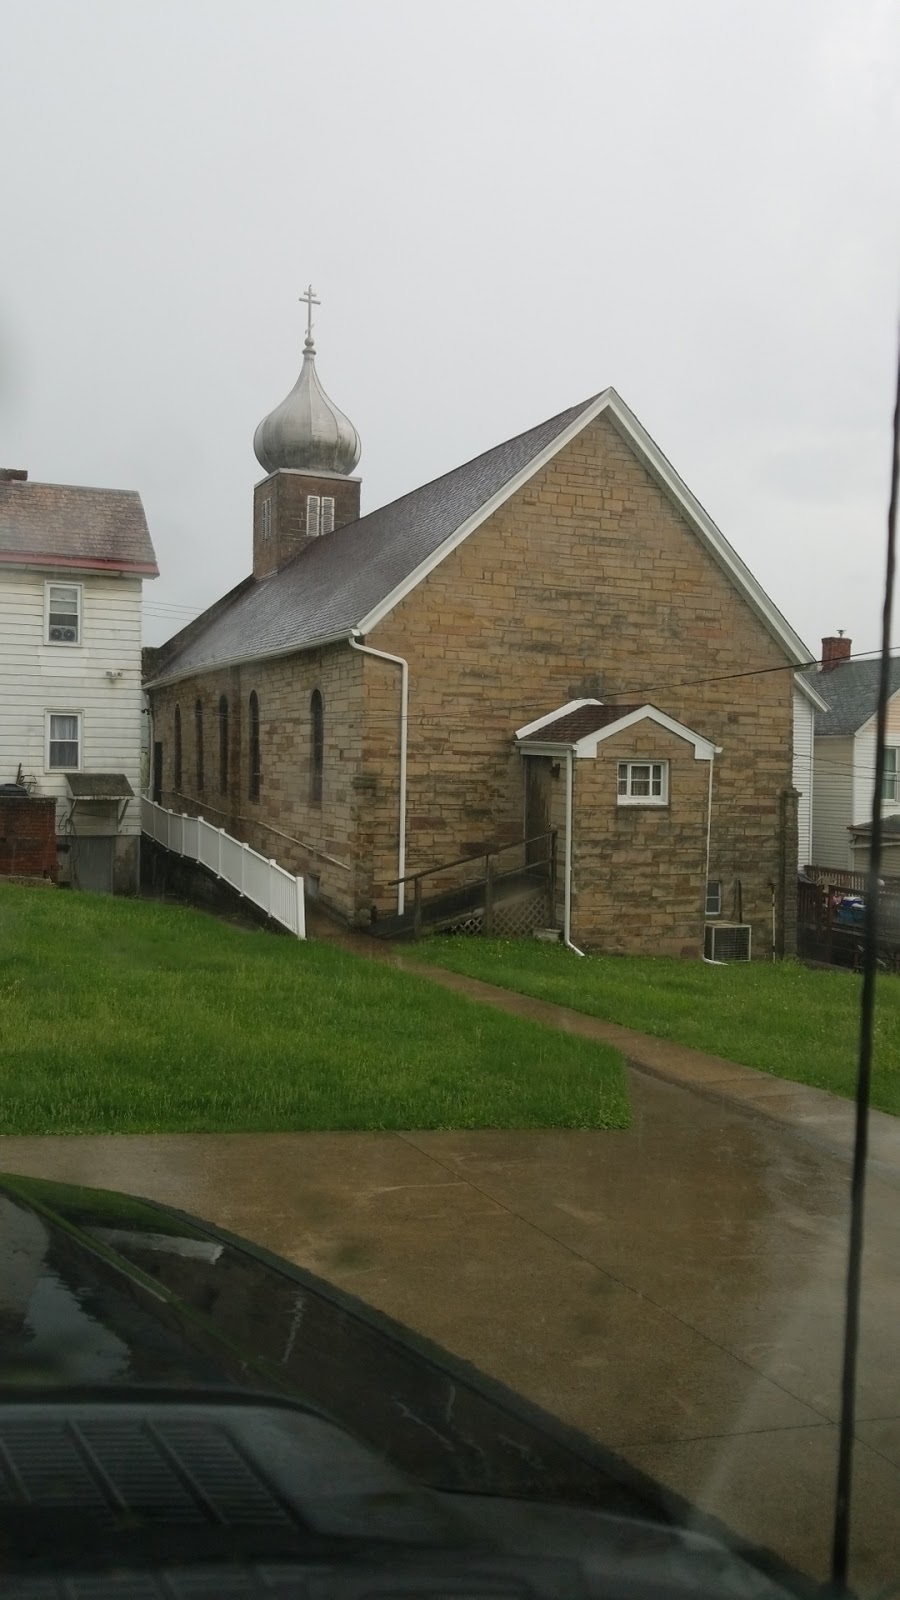 St Demetrius Catholic Church Hall | 1015 Gaskill Ave, Jeannette, PA 15644, USA | Phone: (724) 864-1897